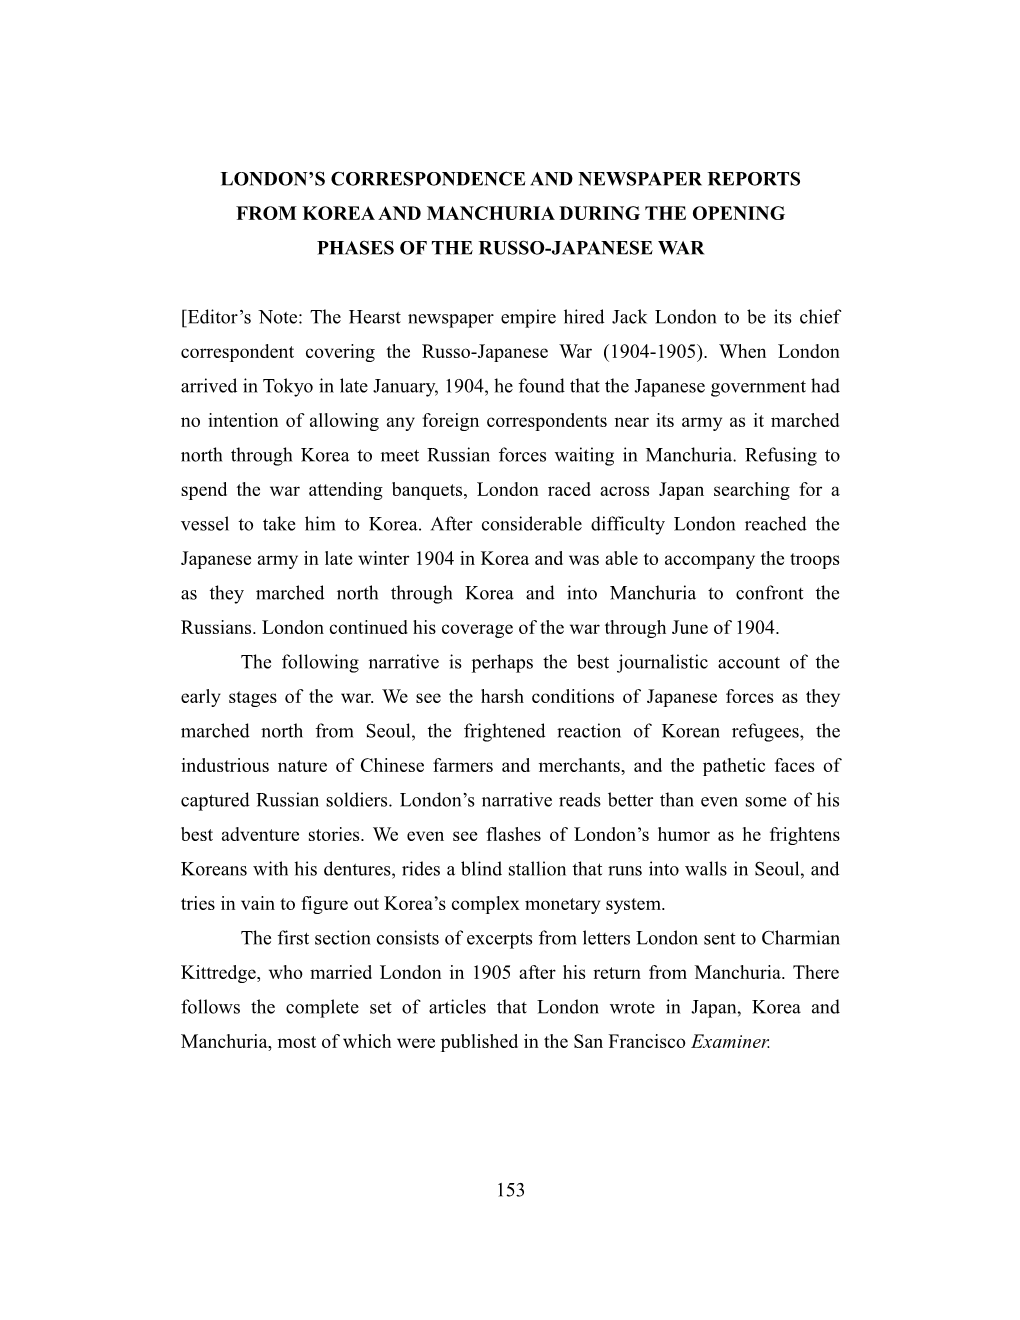 London Scorrespondence and Newspaper Reports